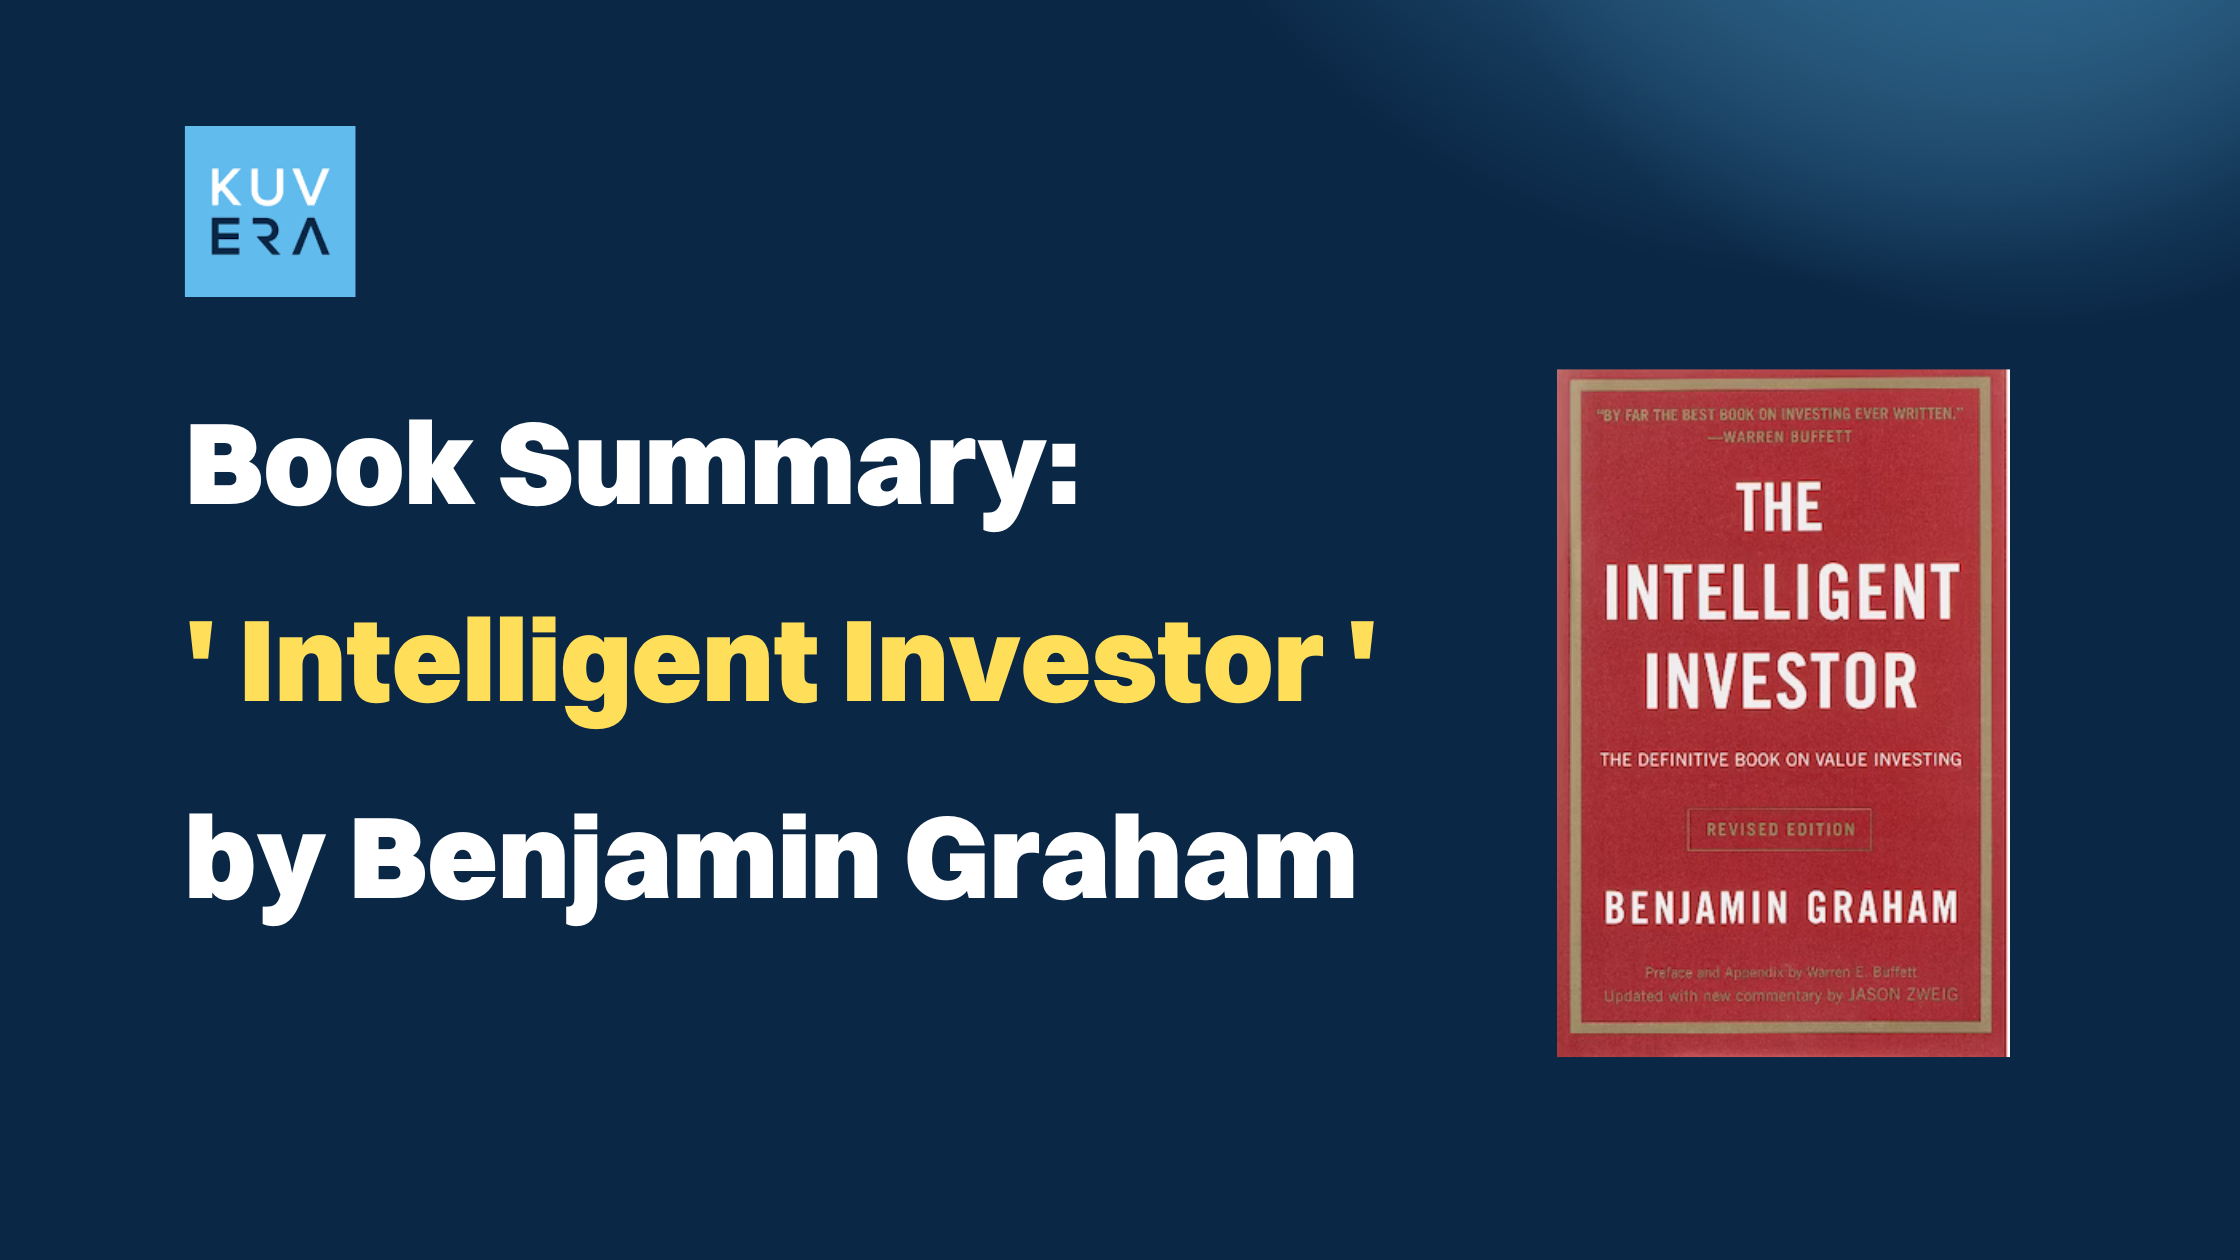 The Intelligent Investor' by Benjamin Graham Summary